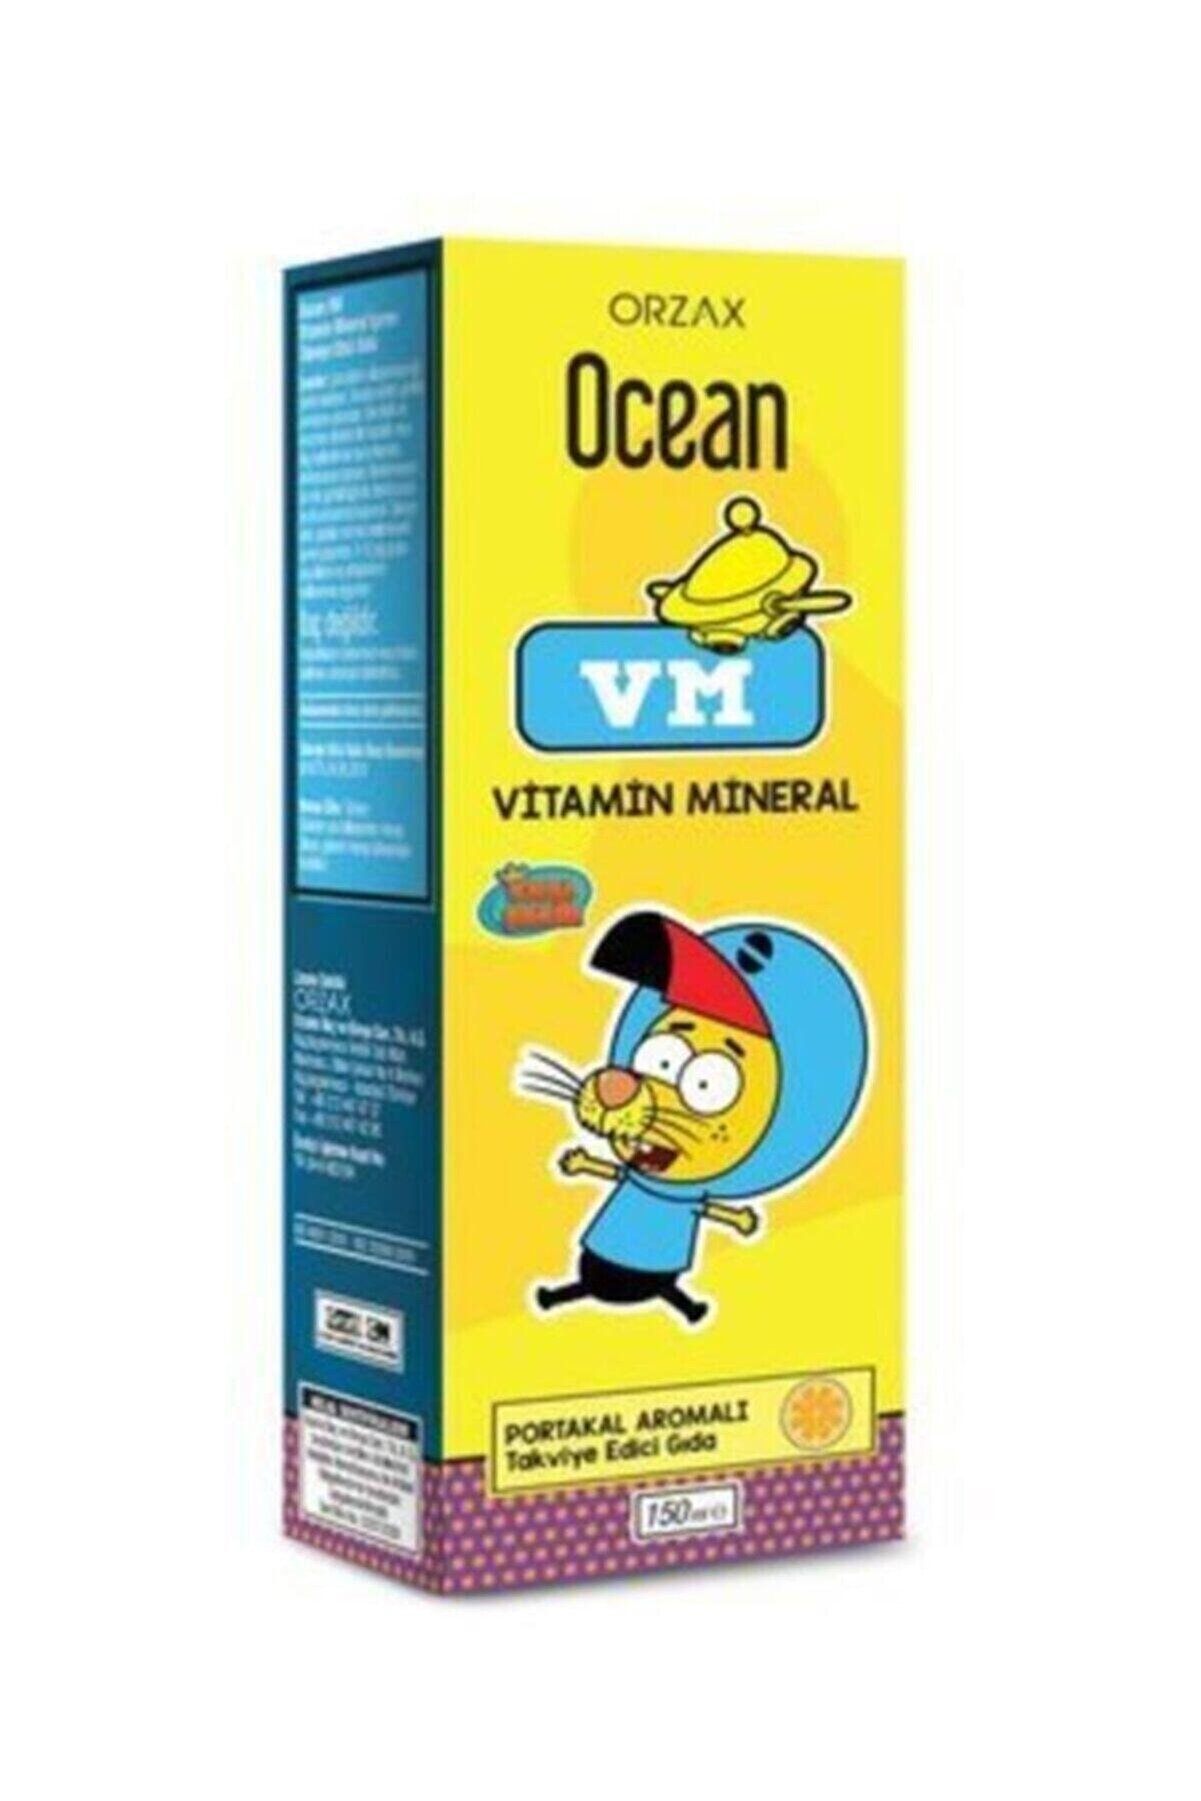 Ocean Vm Vitamin Mineral 150 ml Portakal Oromalı Kral Şakir Kutulu Şurup